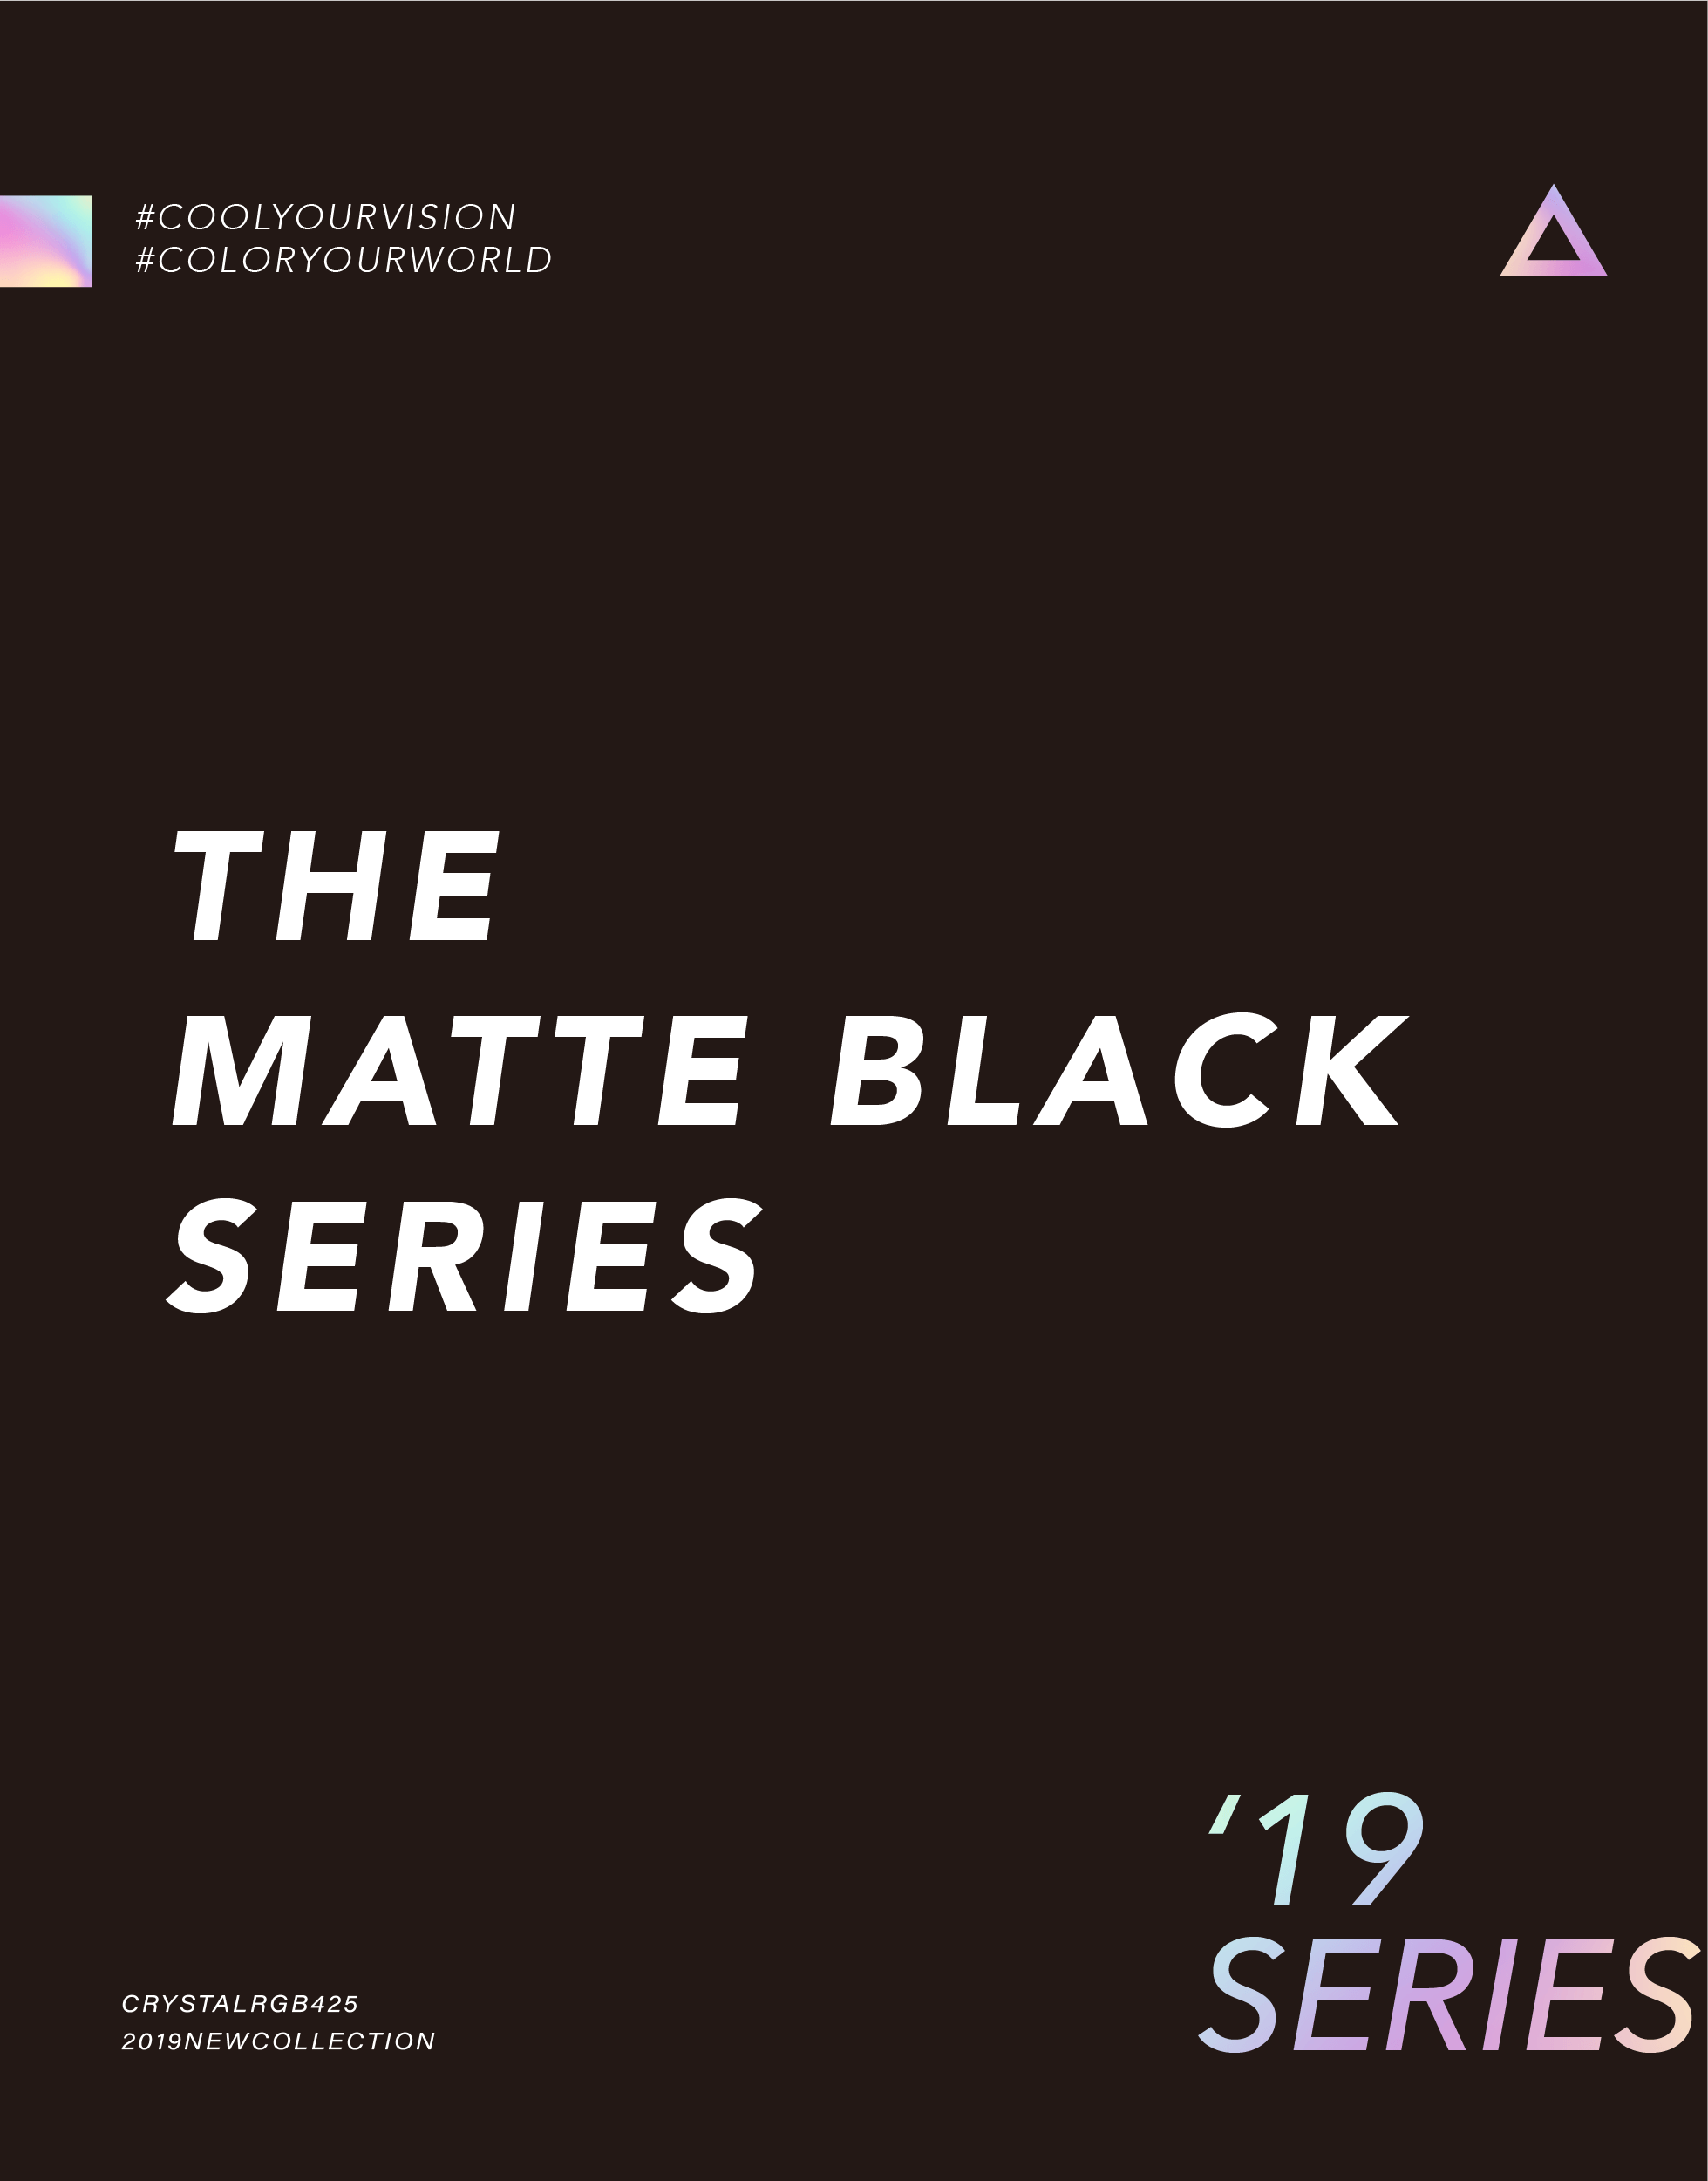 The Matte Black Series - '19 SERIES